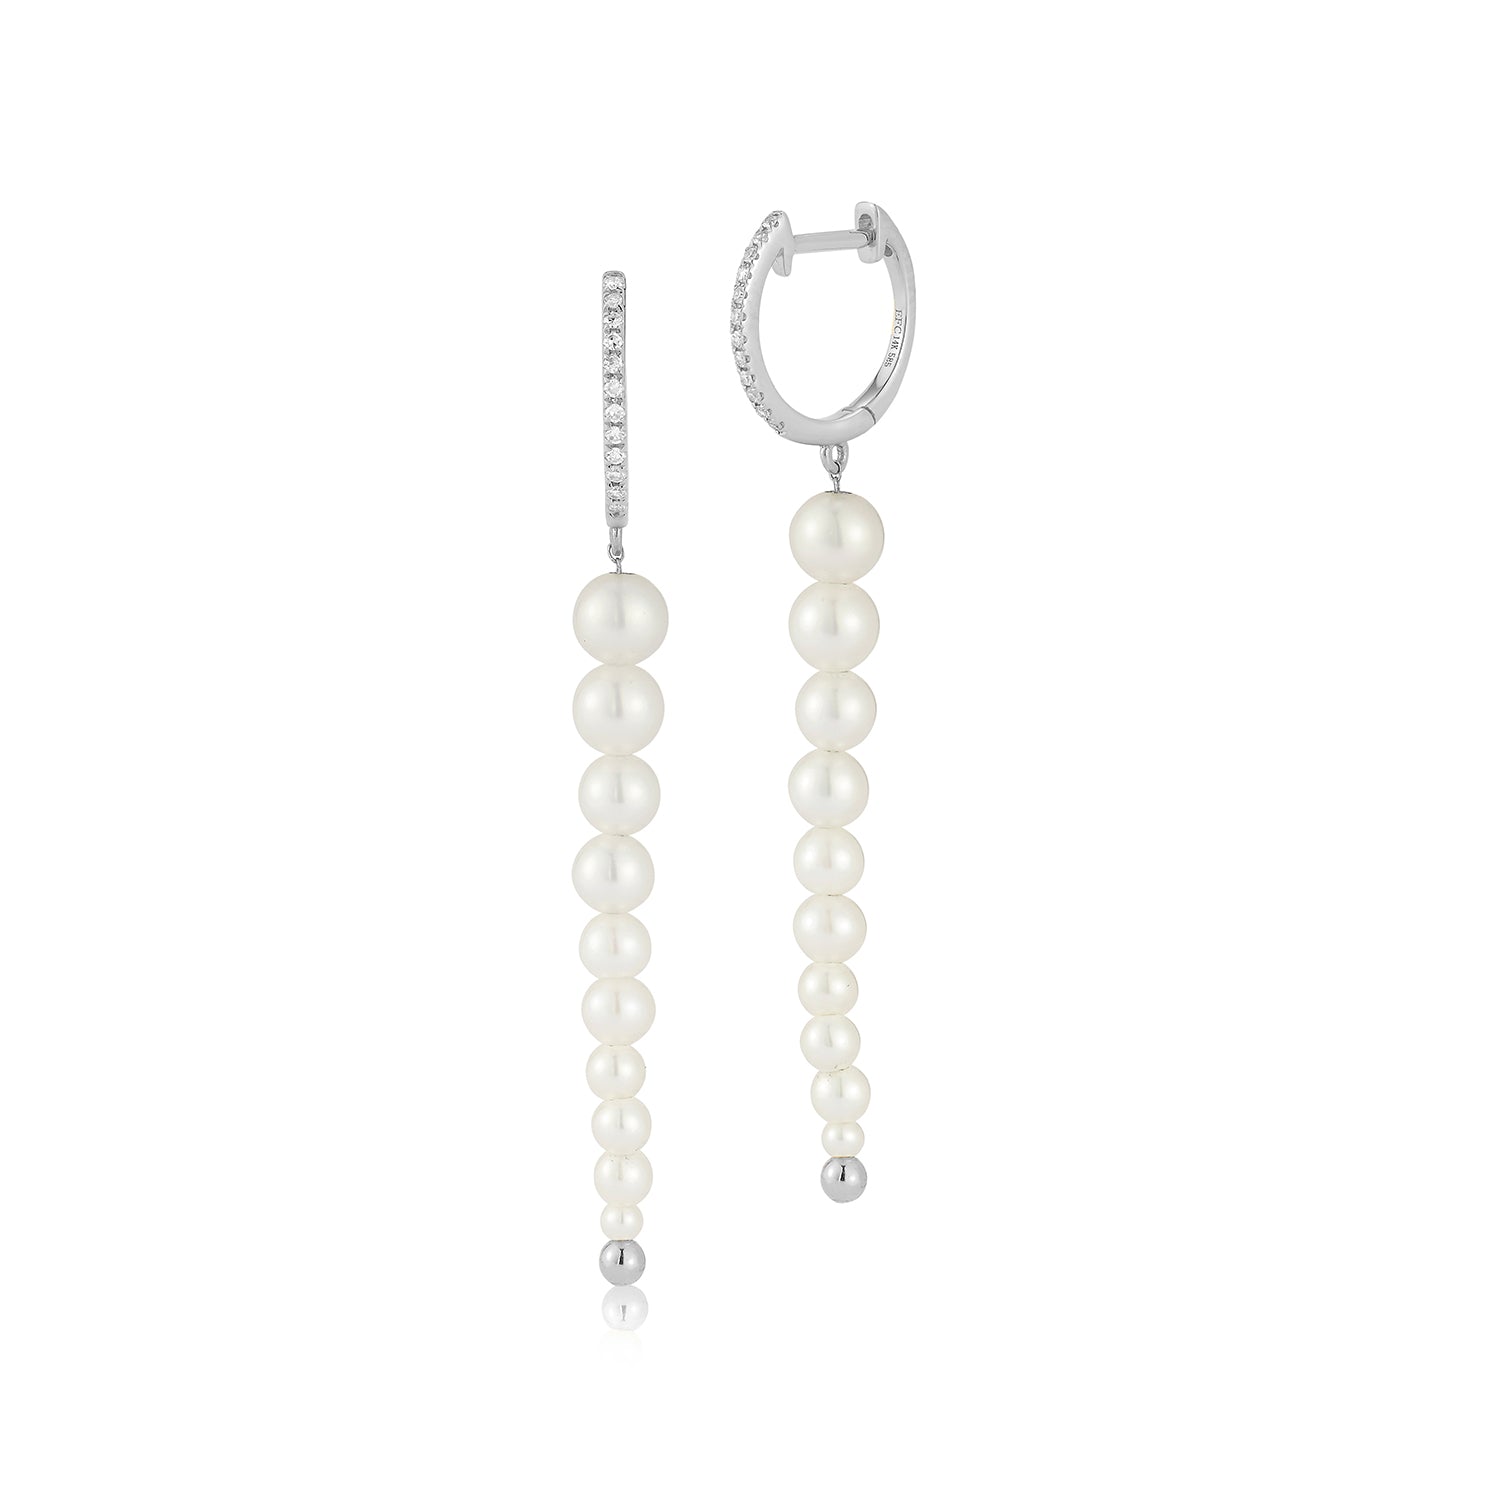 Diamond & Graduated Pearl Drop Earrings in 14k white gold